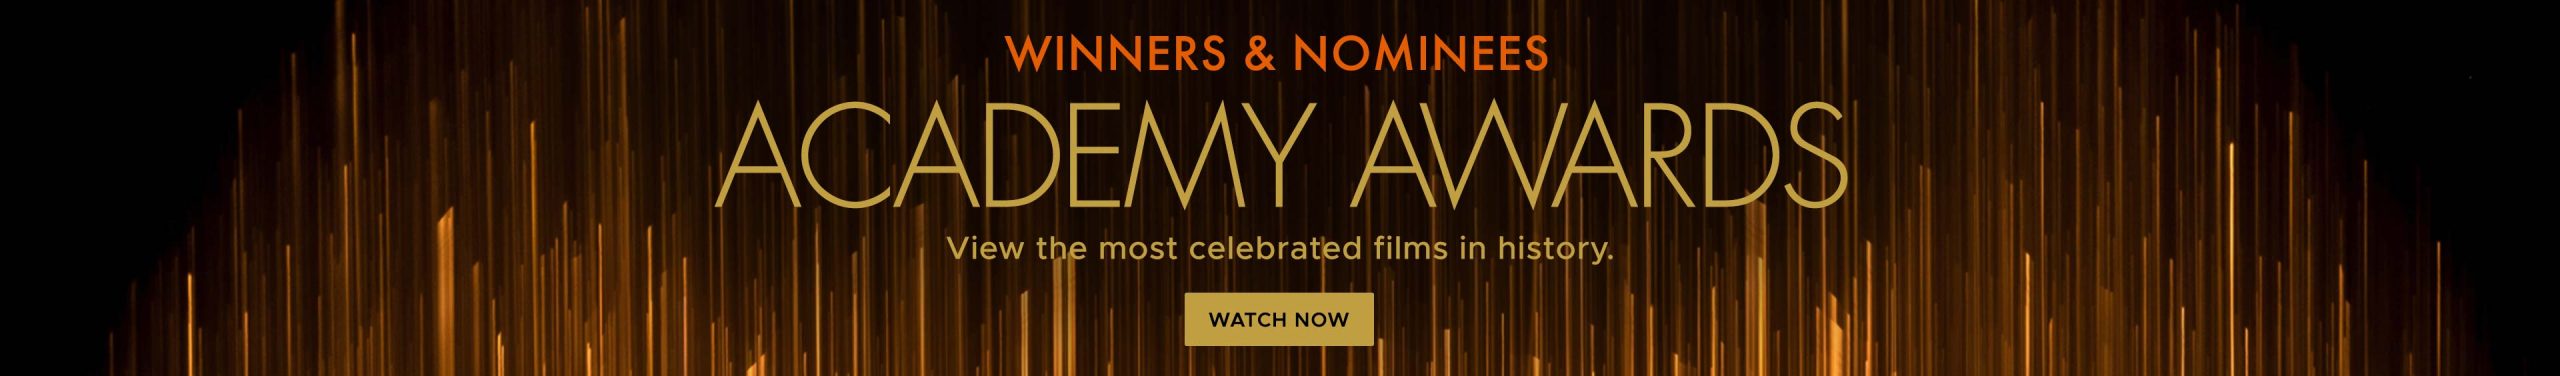 kanopy_academy_awards